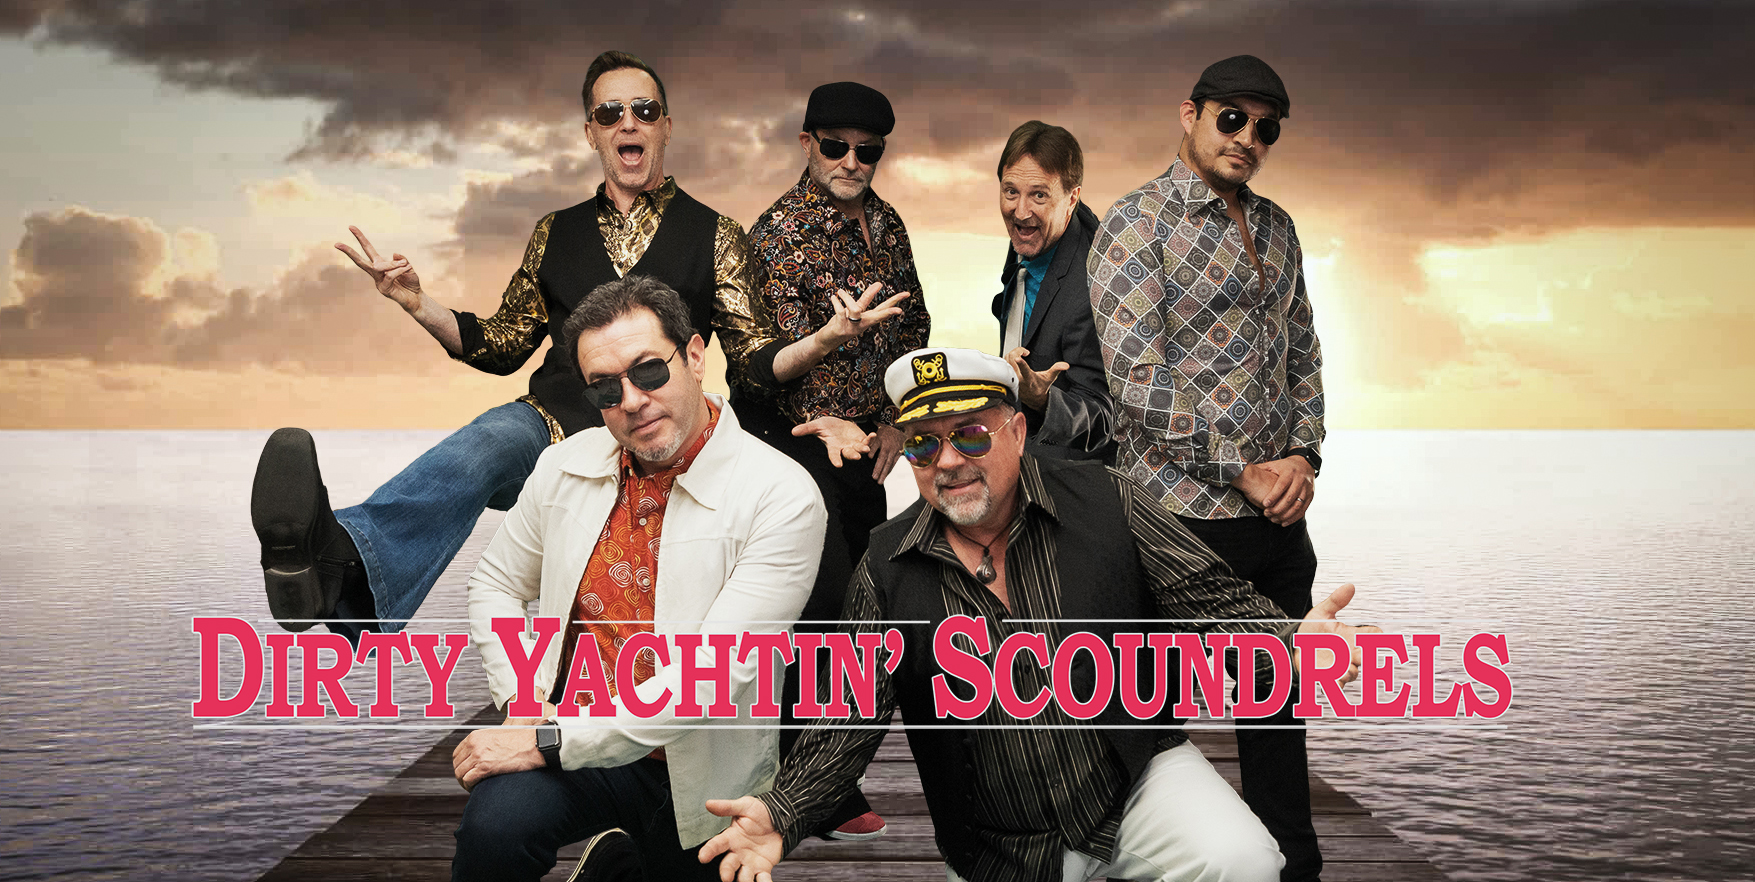 Dirty Yachtin' Scoundrels - Arizona Yacht Rock Band